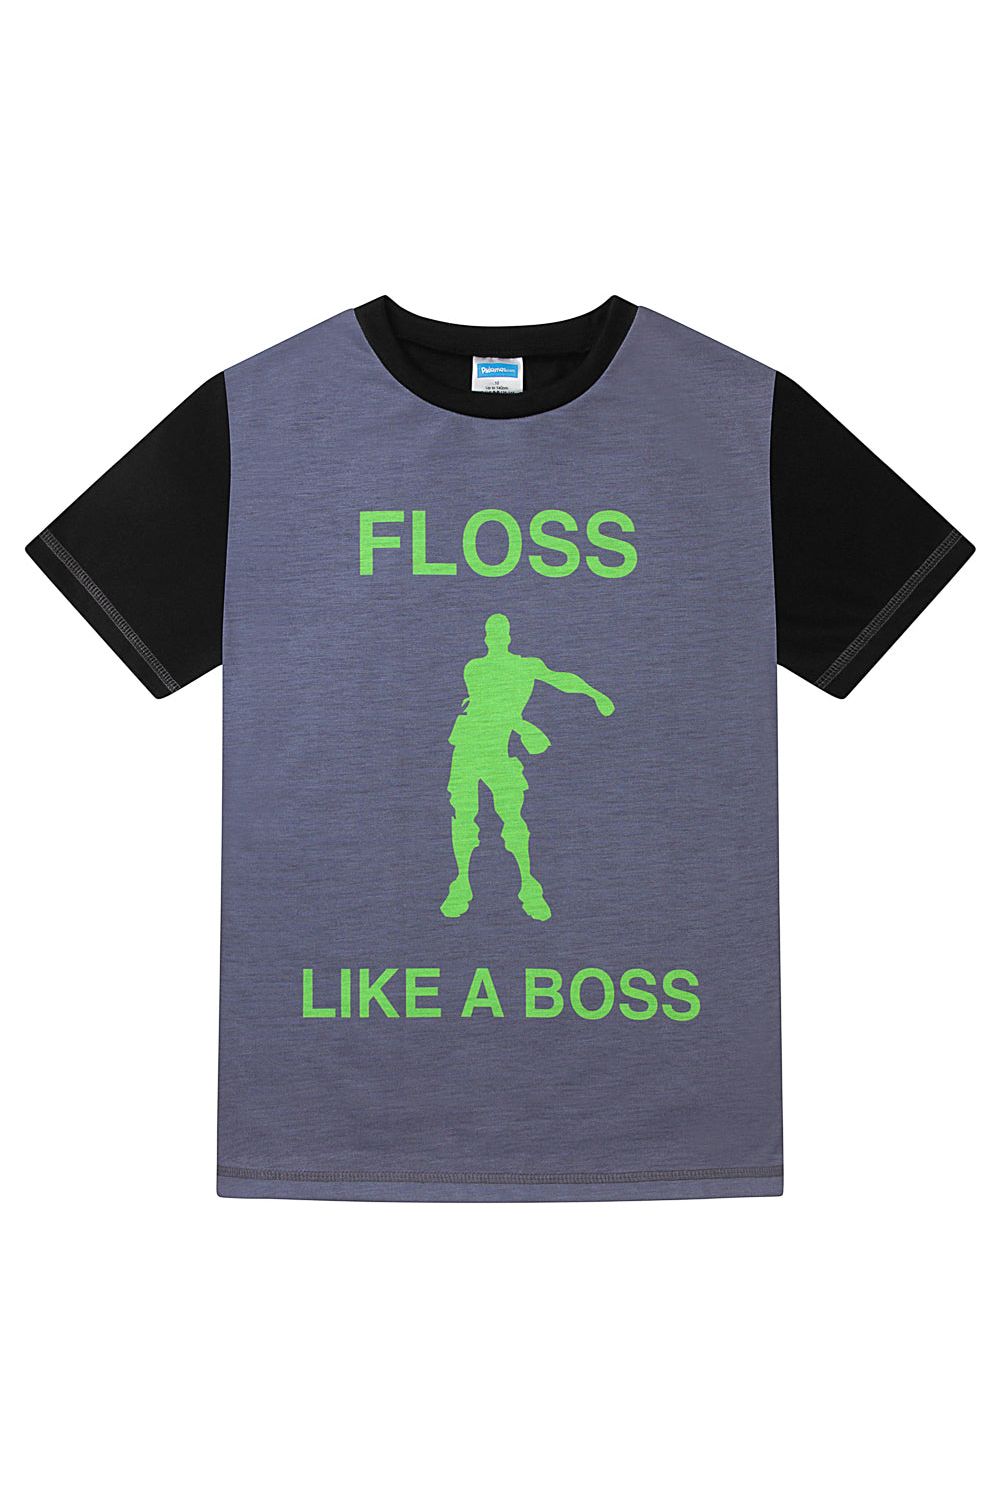 Floss Like a Boss  Emote Dance Gaming Short Pyjamas Green - Pyjamas.com